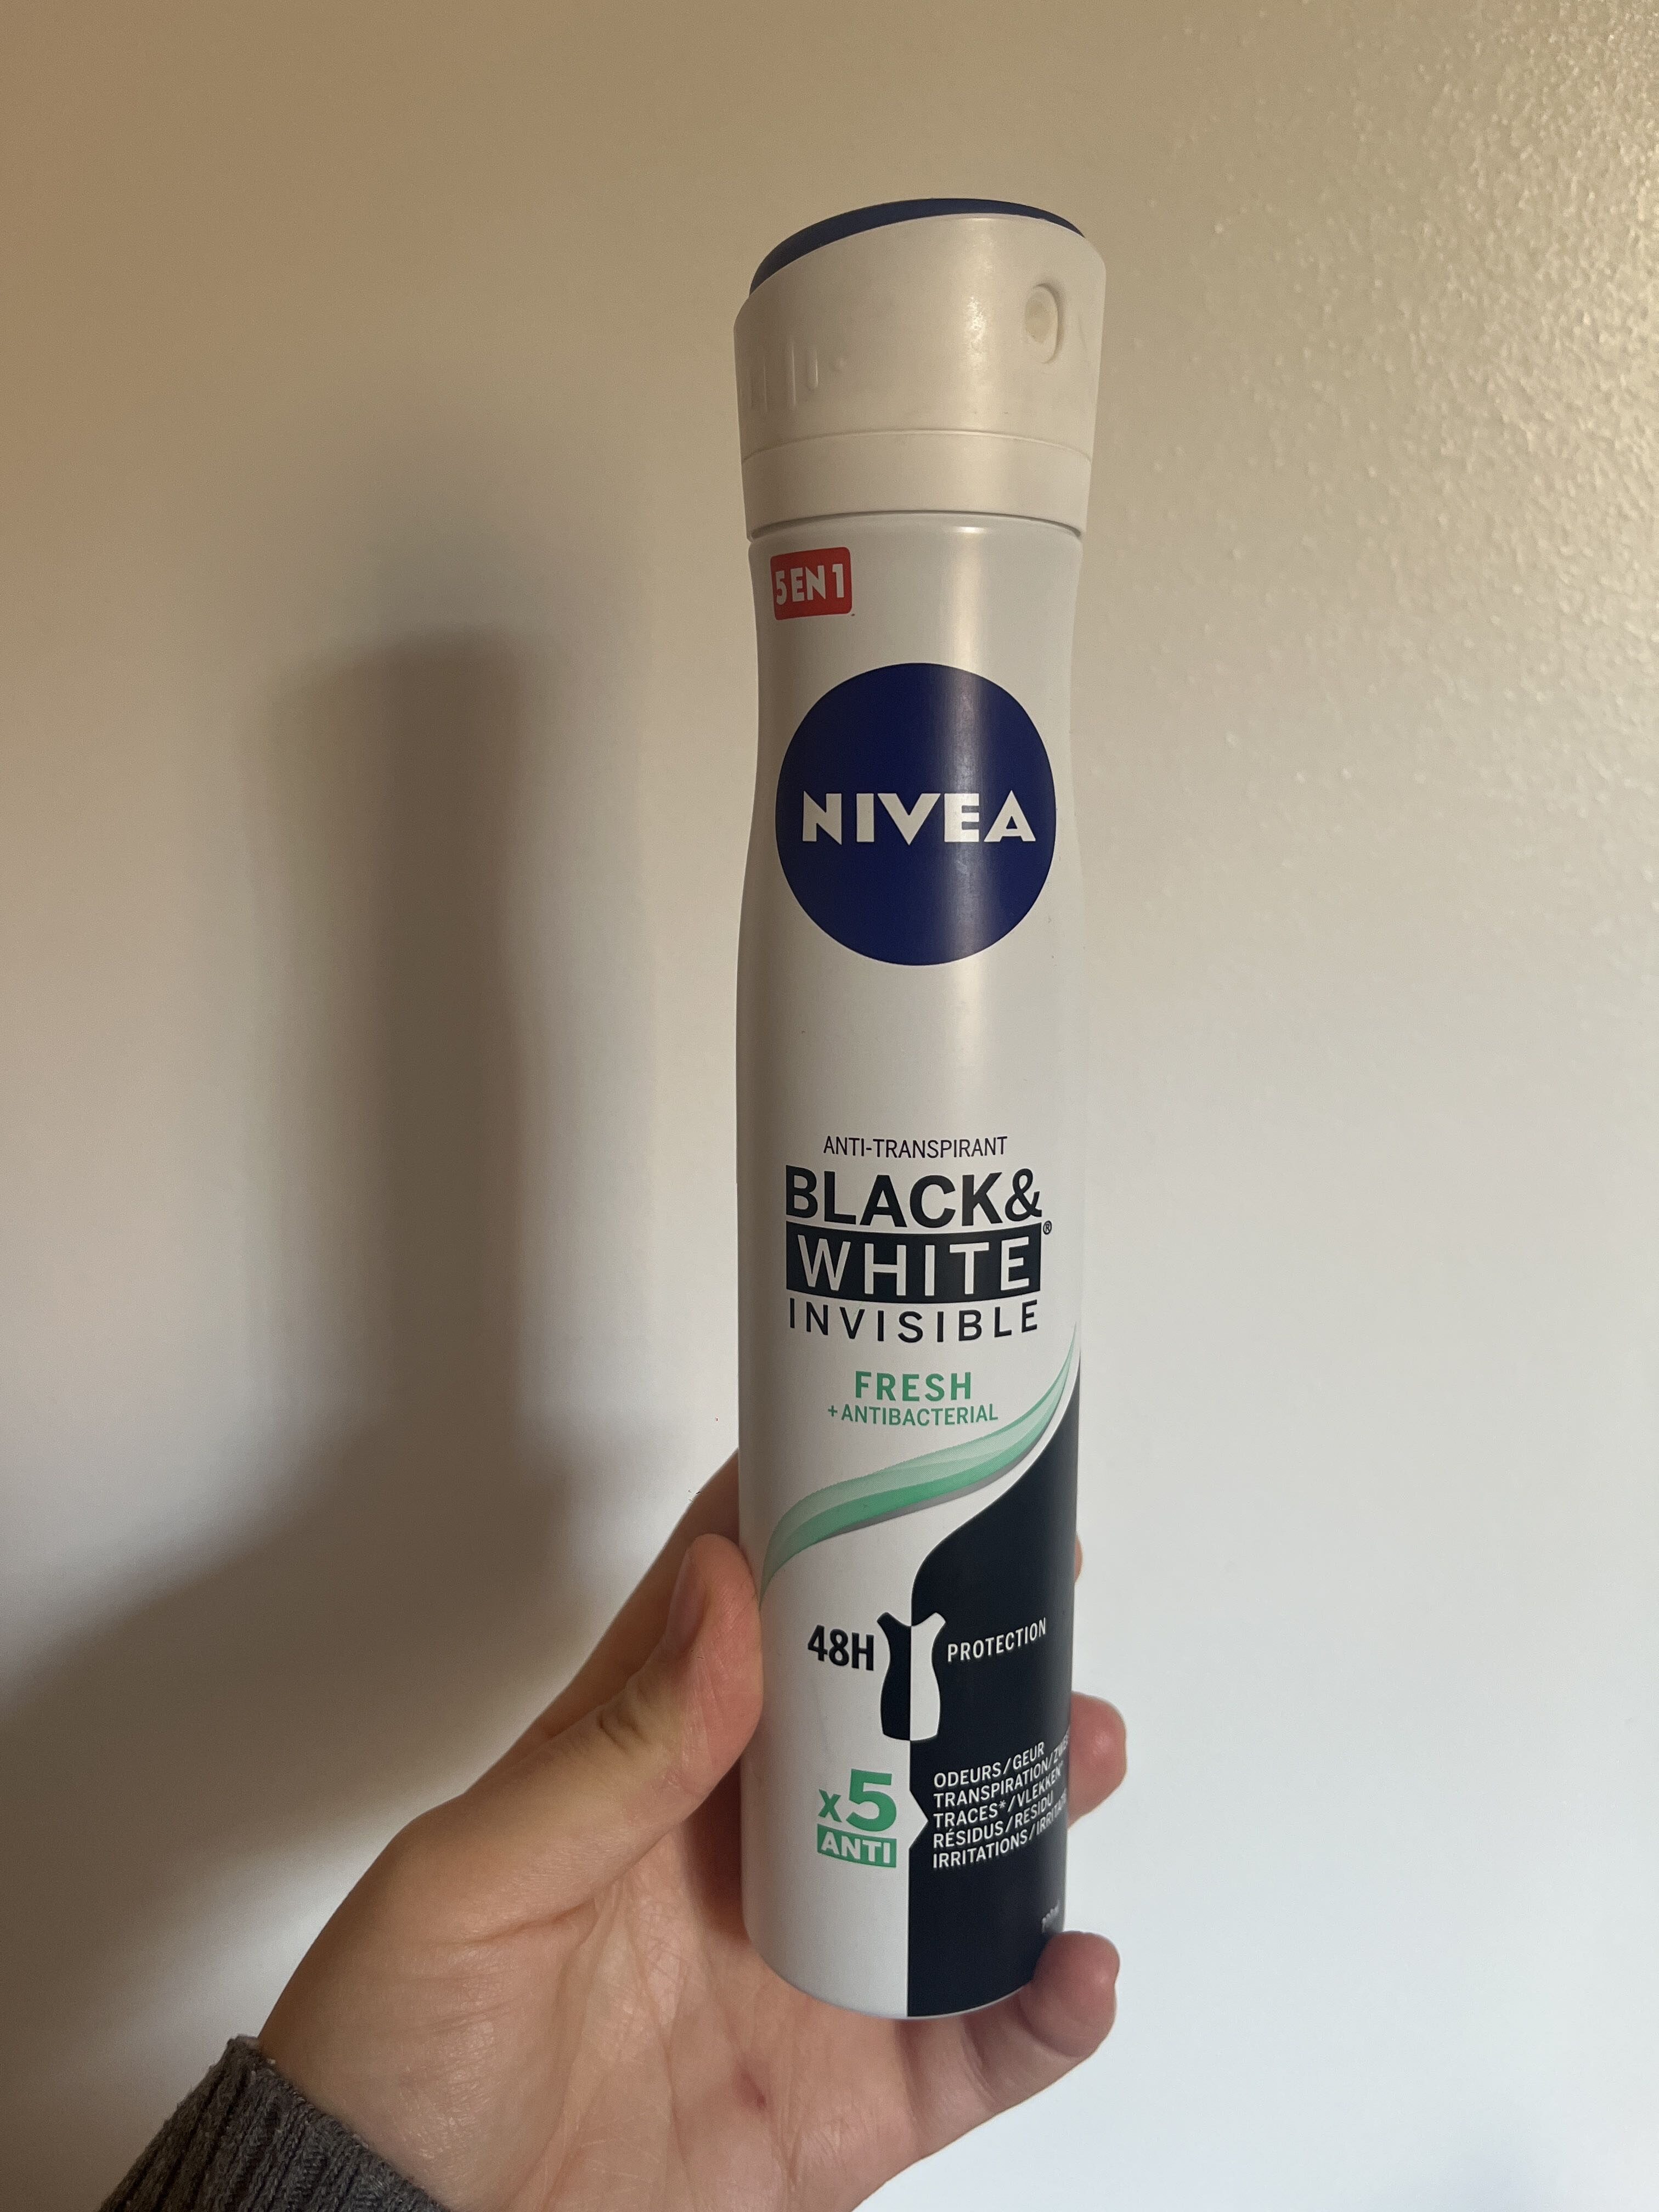 Déodorant Nivea black & white invisible - Продукт - fr